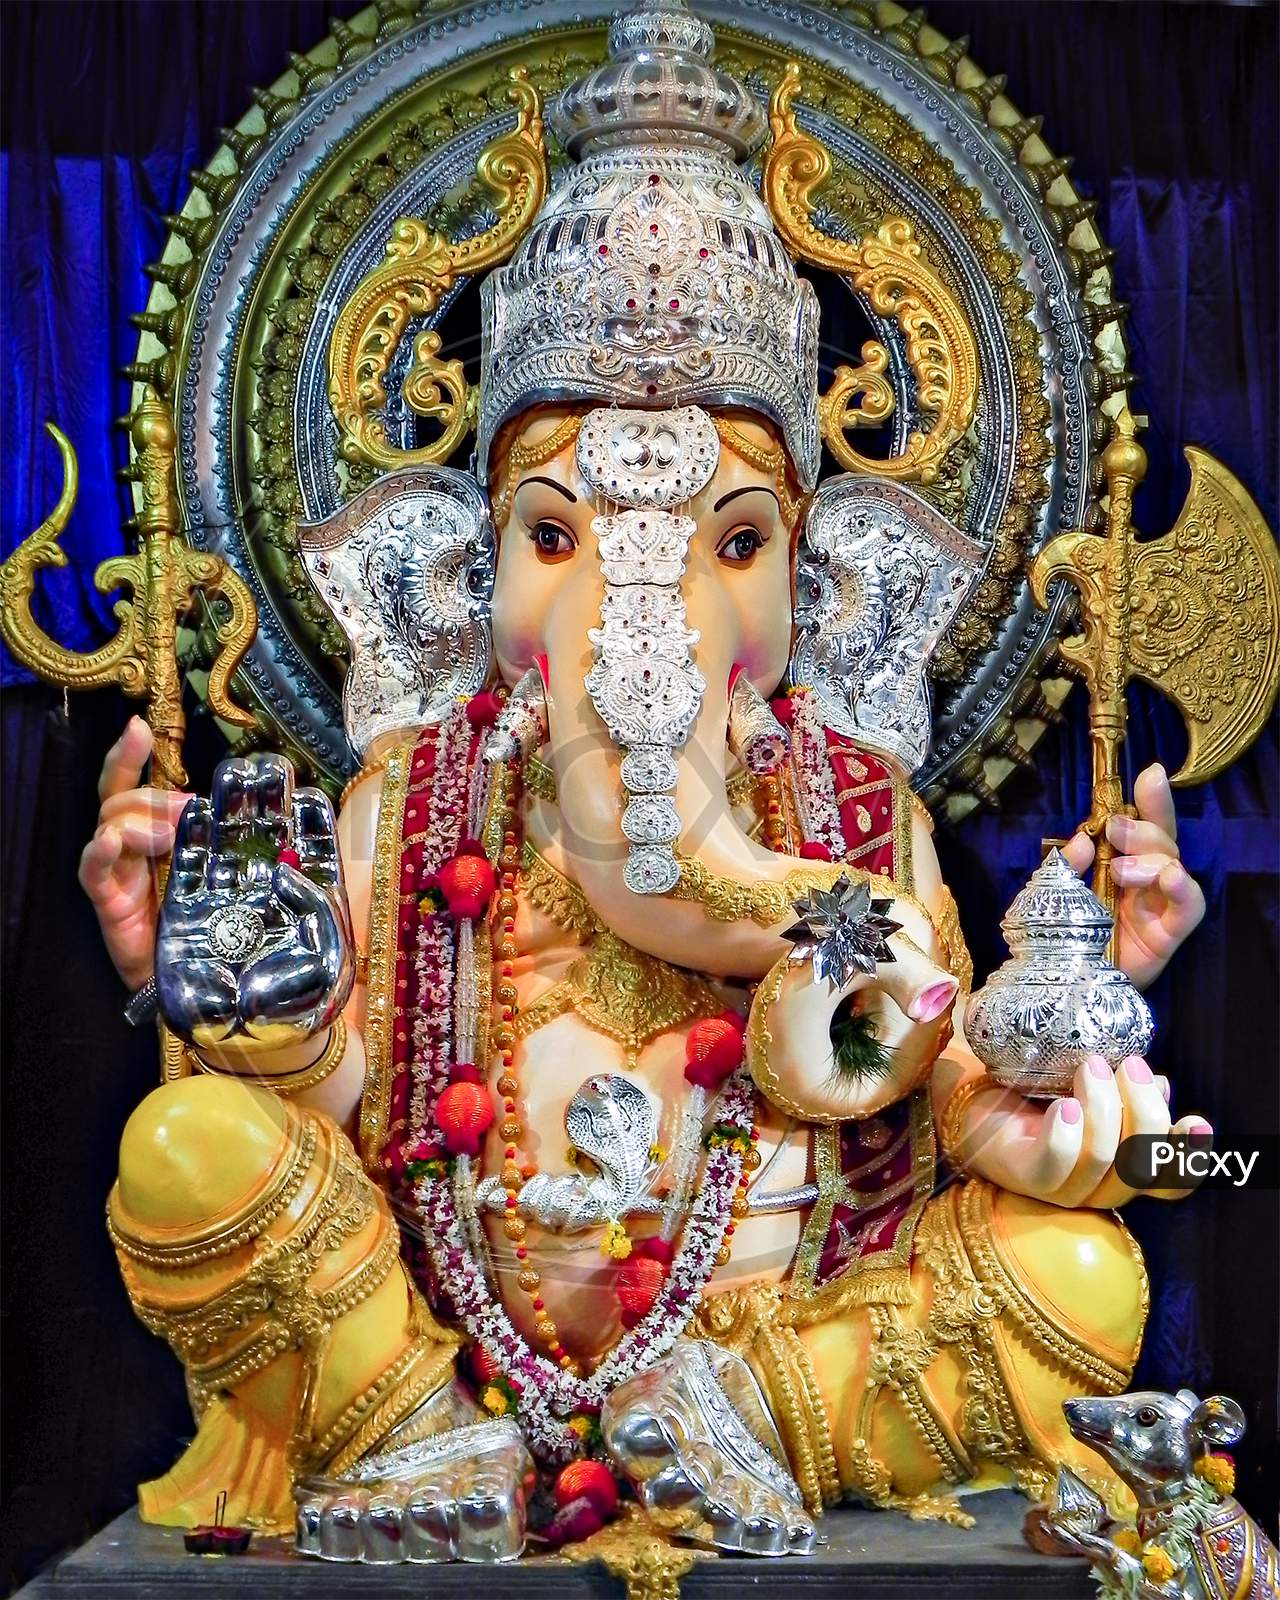 Portrait , Closeup View Of Decorated And Garlanded Idol Of Hindu God Ganesha .